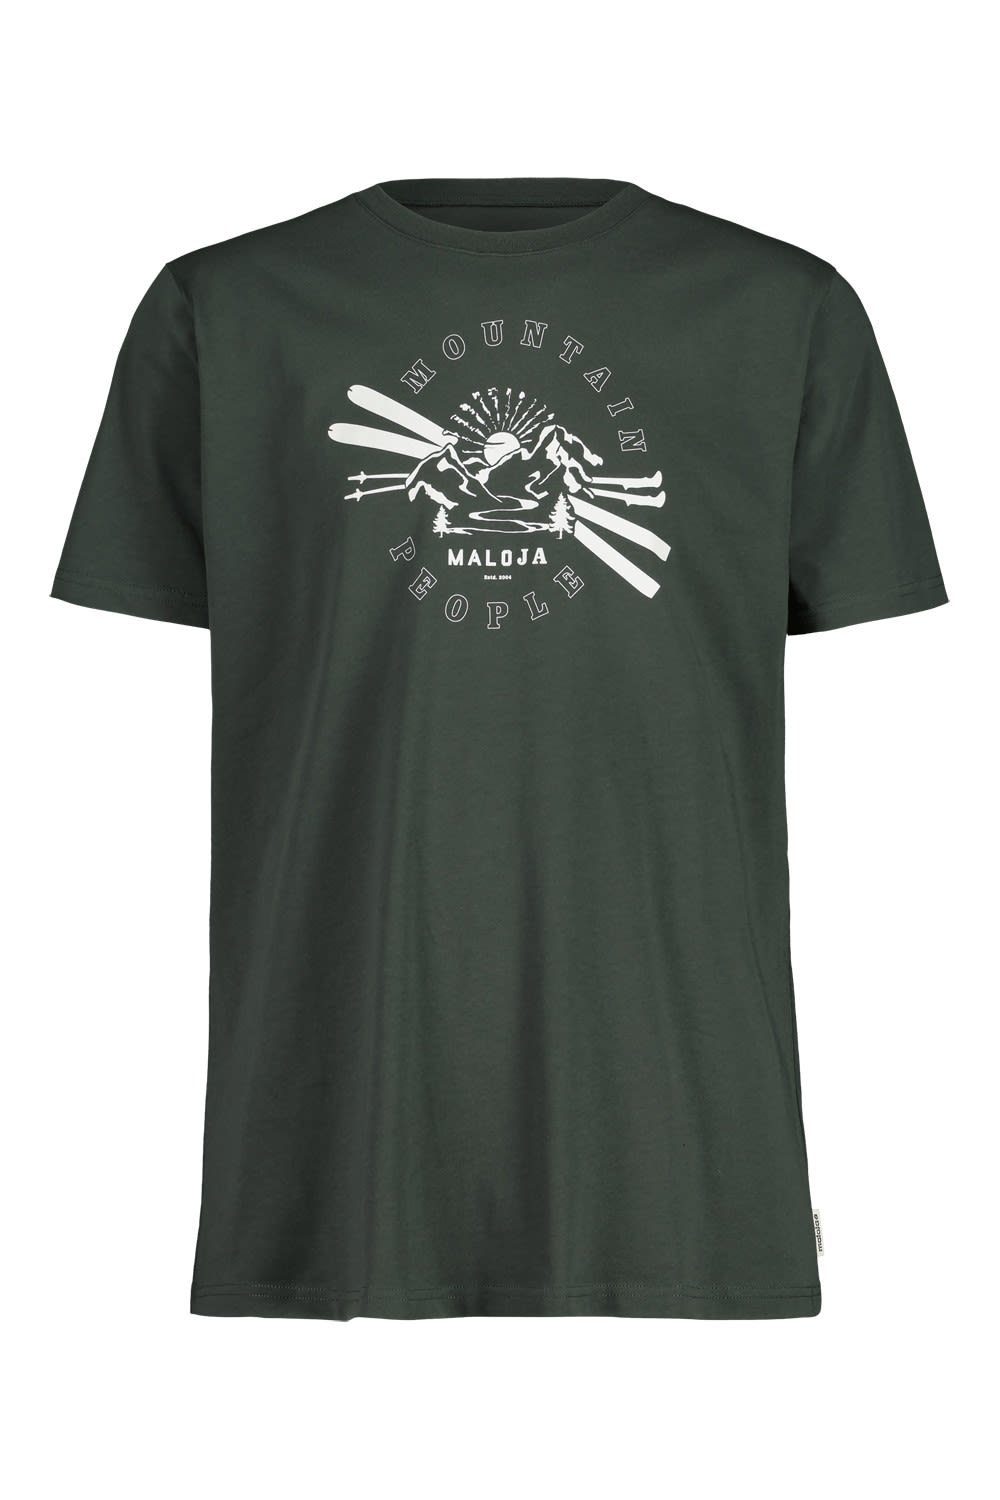 Maloja Patteriolm. Herren Green T-shirt M Kurzarm-Shirt Maloja T-Shirt